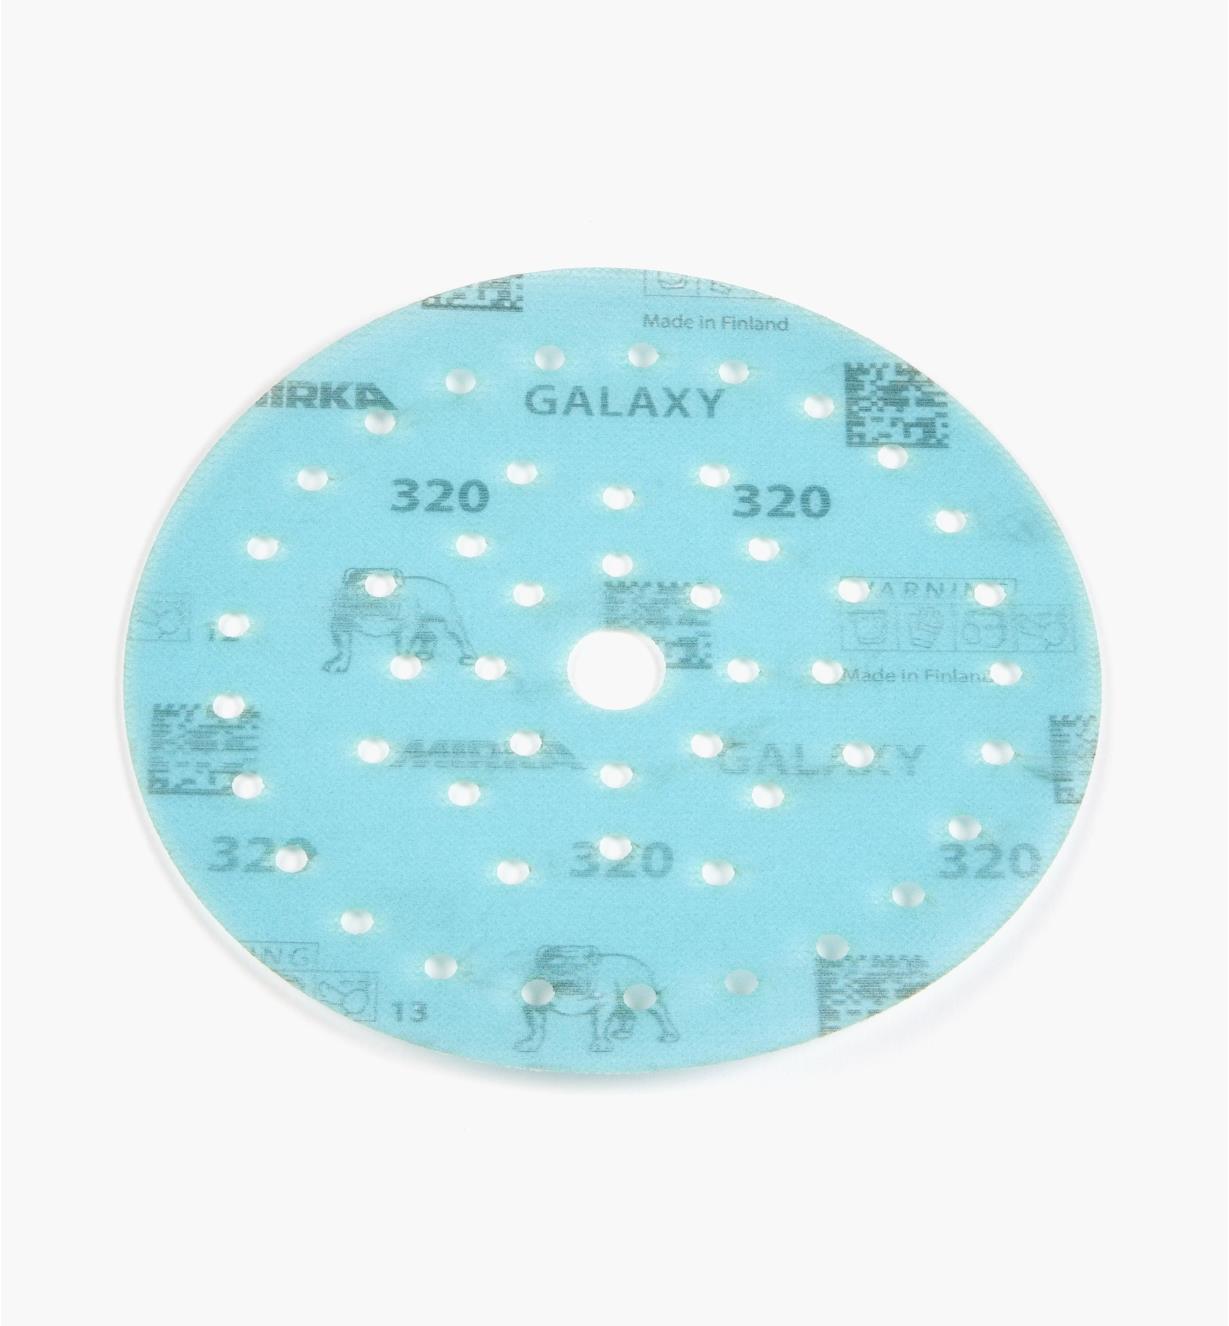 08K2149 - 320x 6" Galaxy Multifit Grip Disc, ea.